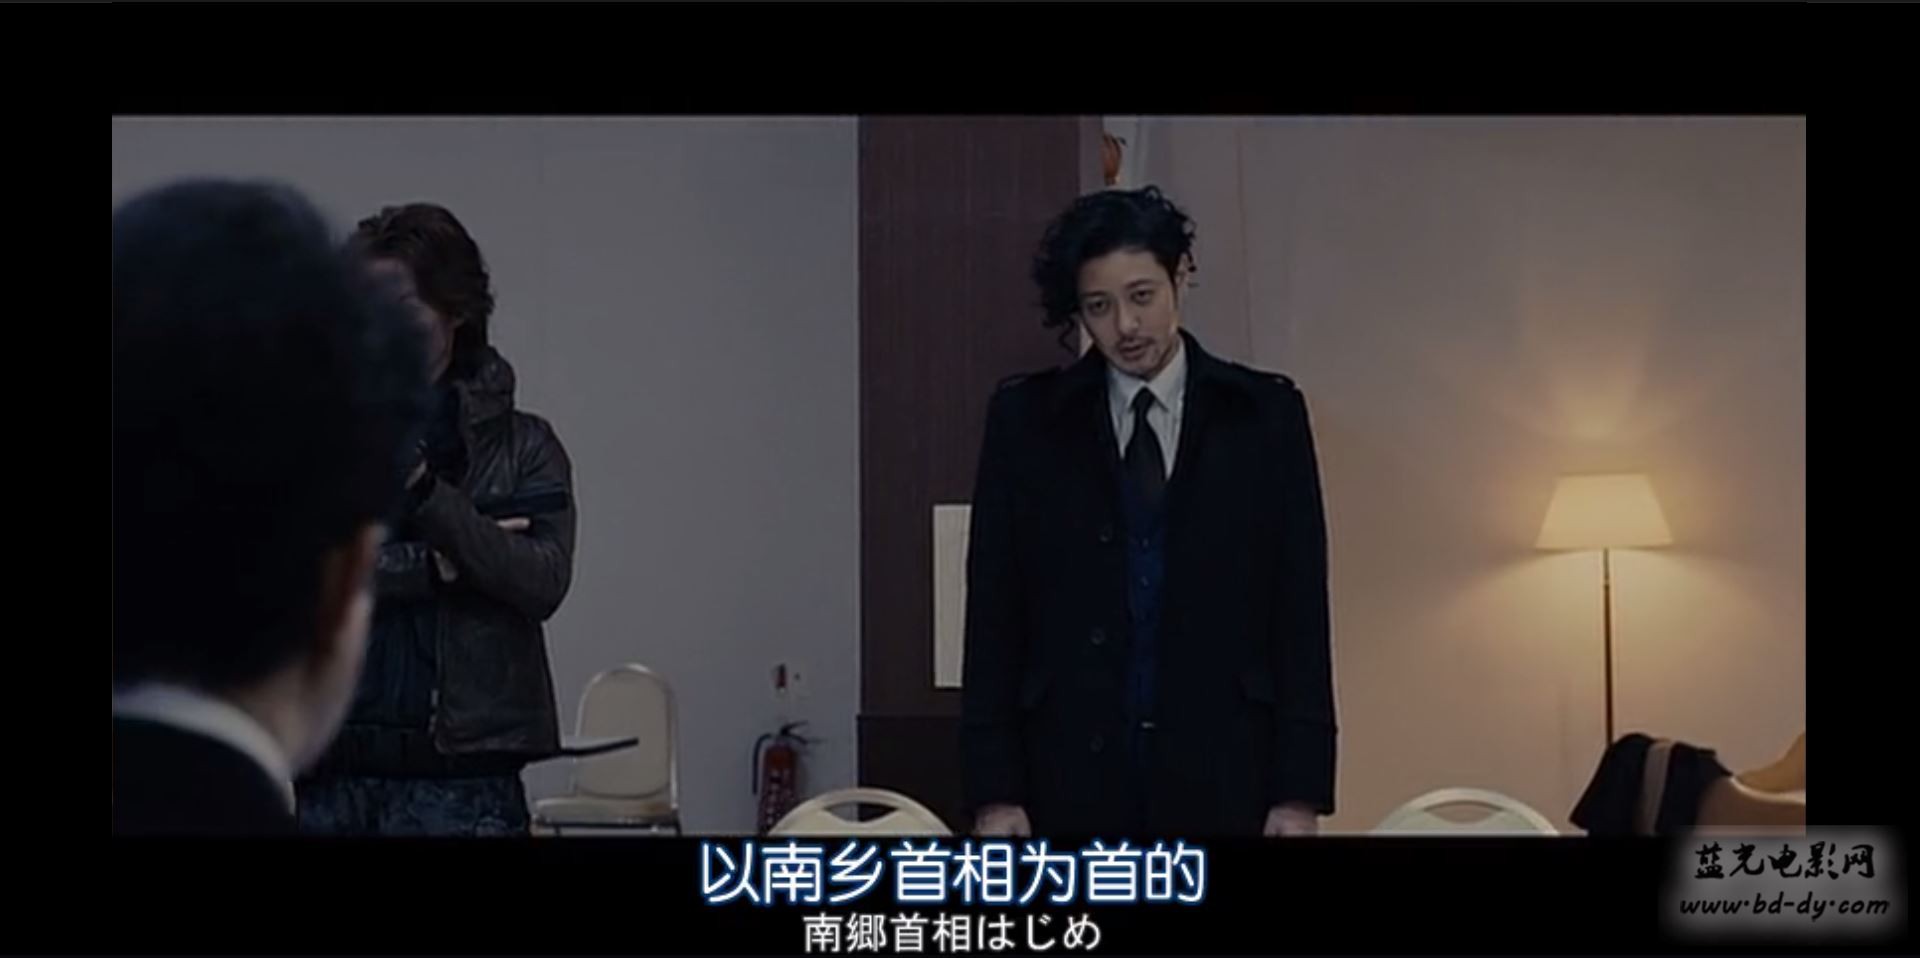 《S-最后的警官 电影版》2015日本动作犯罪.DVD.中日双字截图;jsessionid=c0ShqBx9Wk_uHz5TNa20SrGd6tHKOUiYYQbBOO0Z